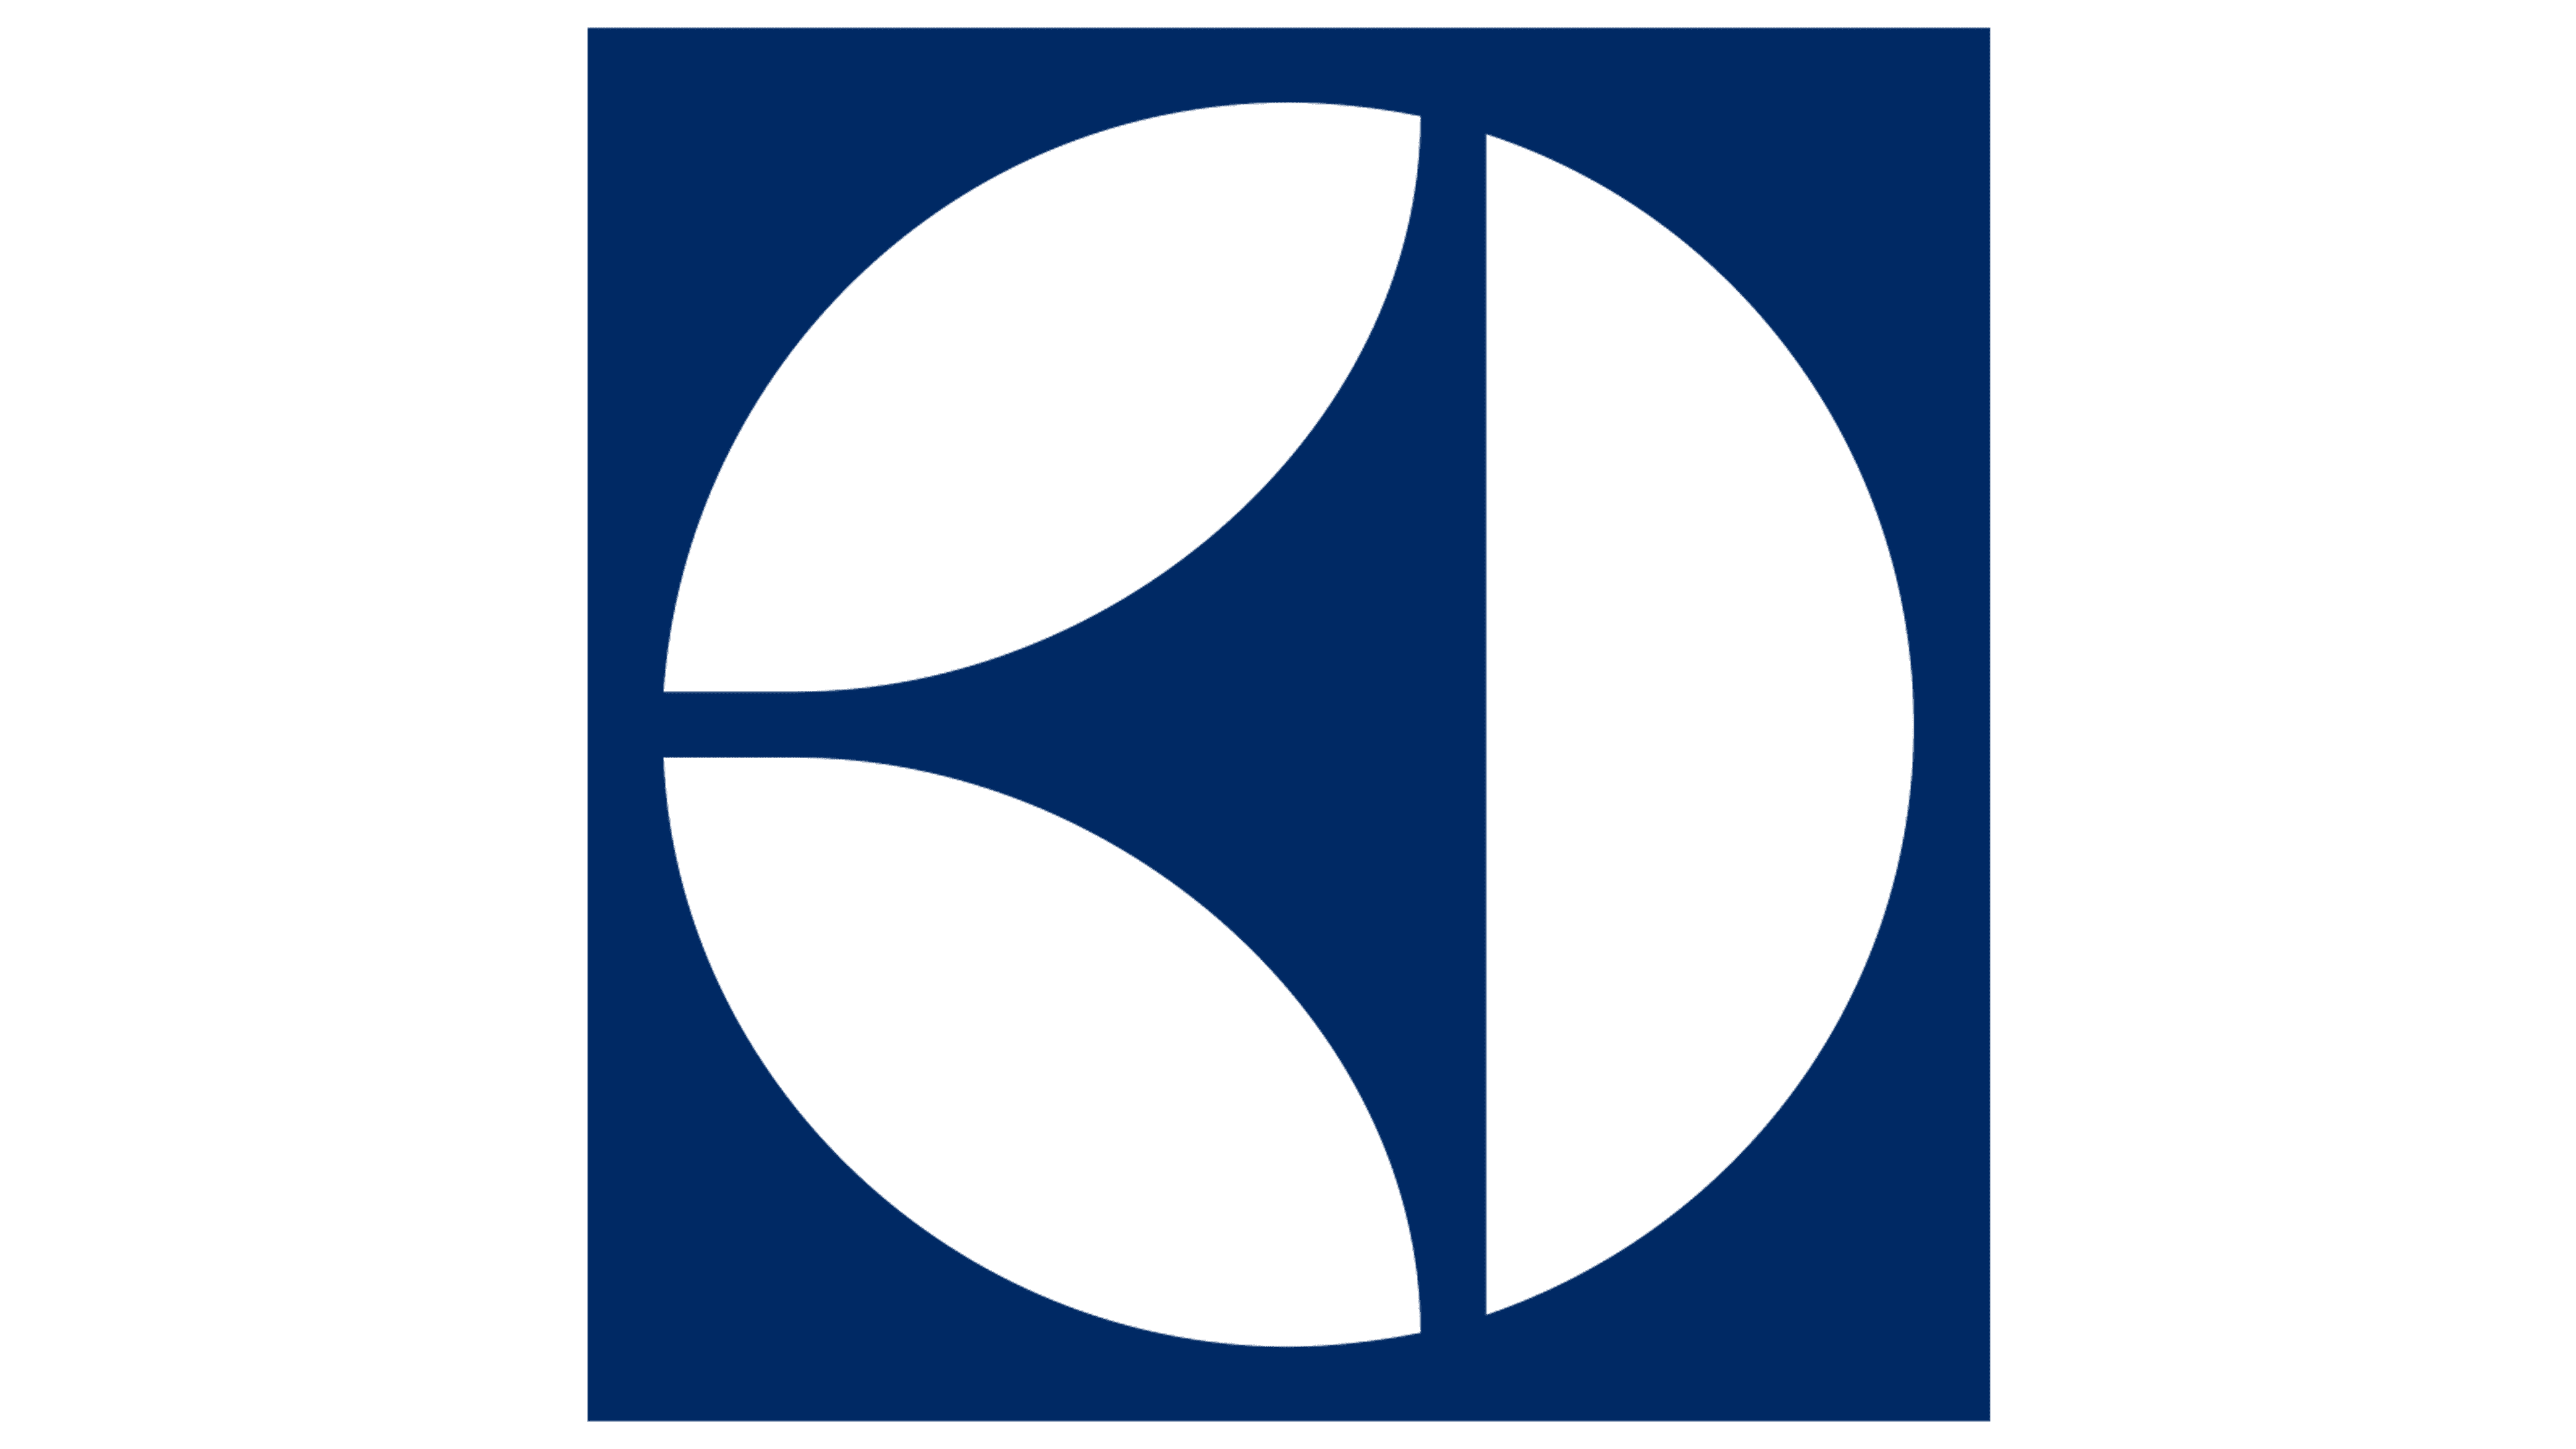 Electrolux Logo | Symbol, History, PNG (3840*2160)